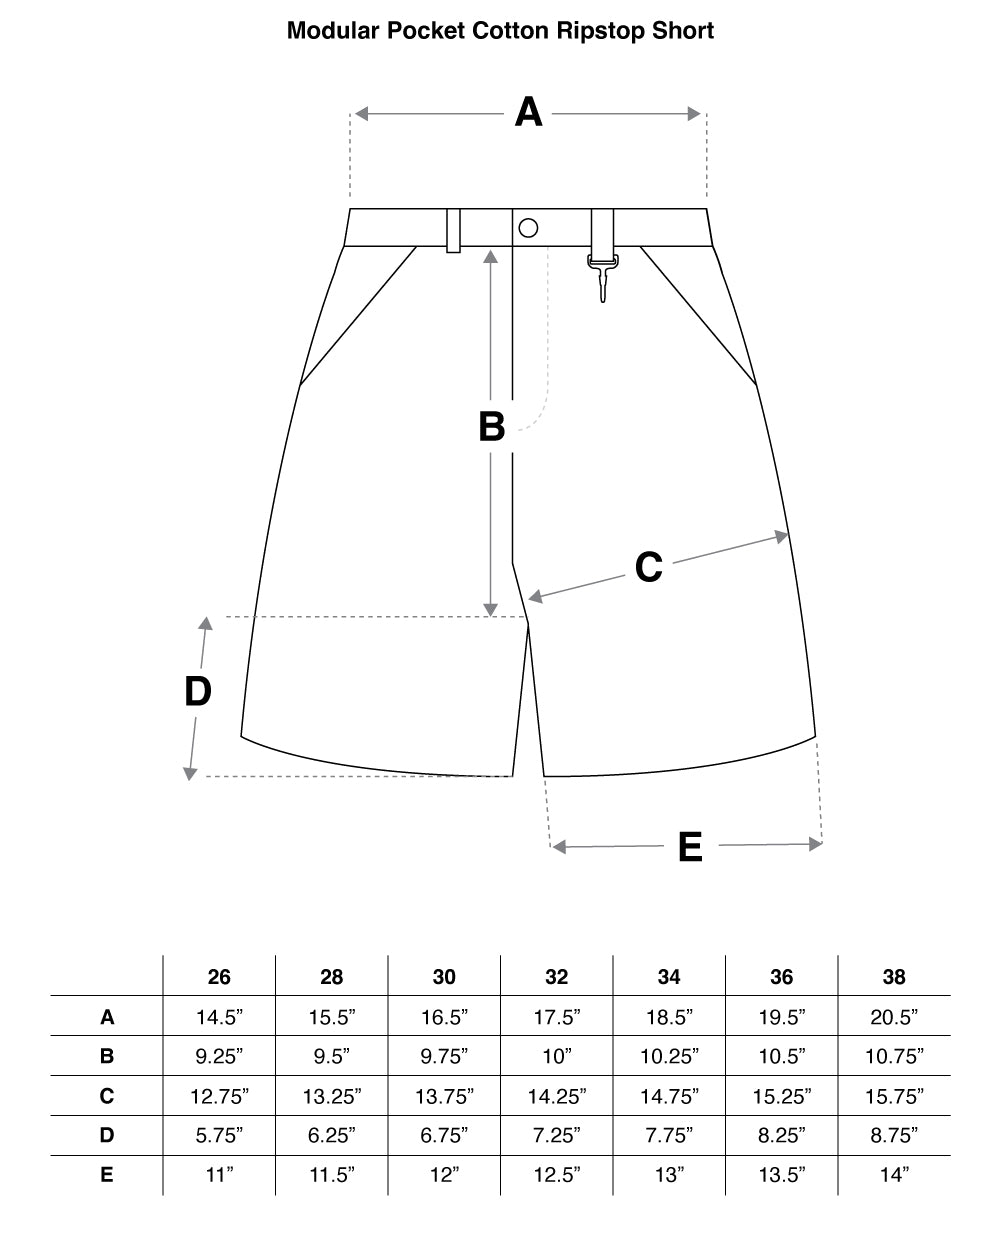 Modular Pocket Cotton Ripstop Short in Sage Size Guide